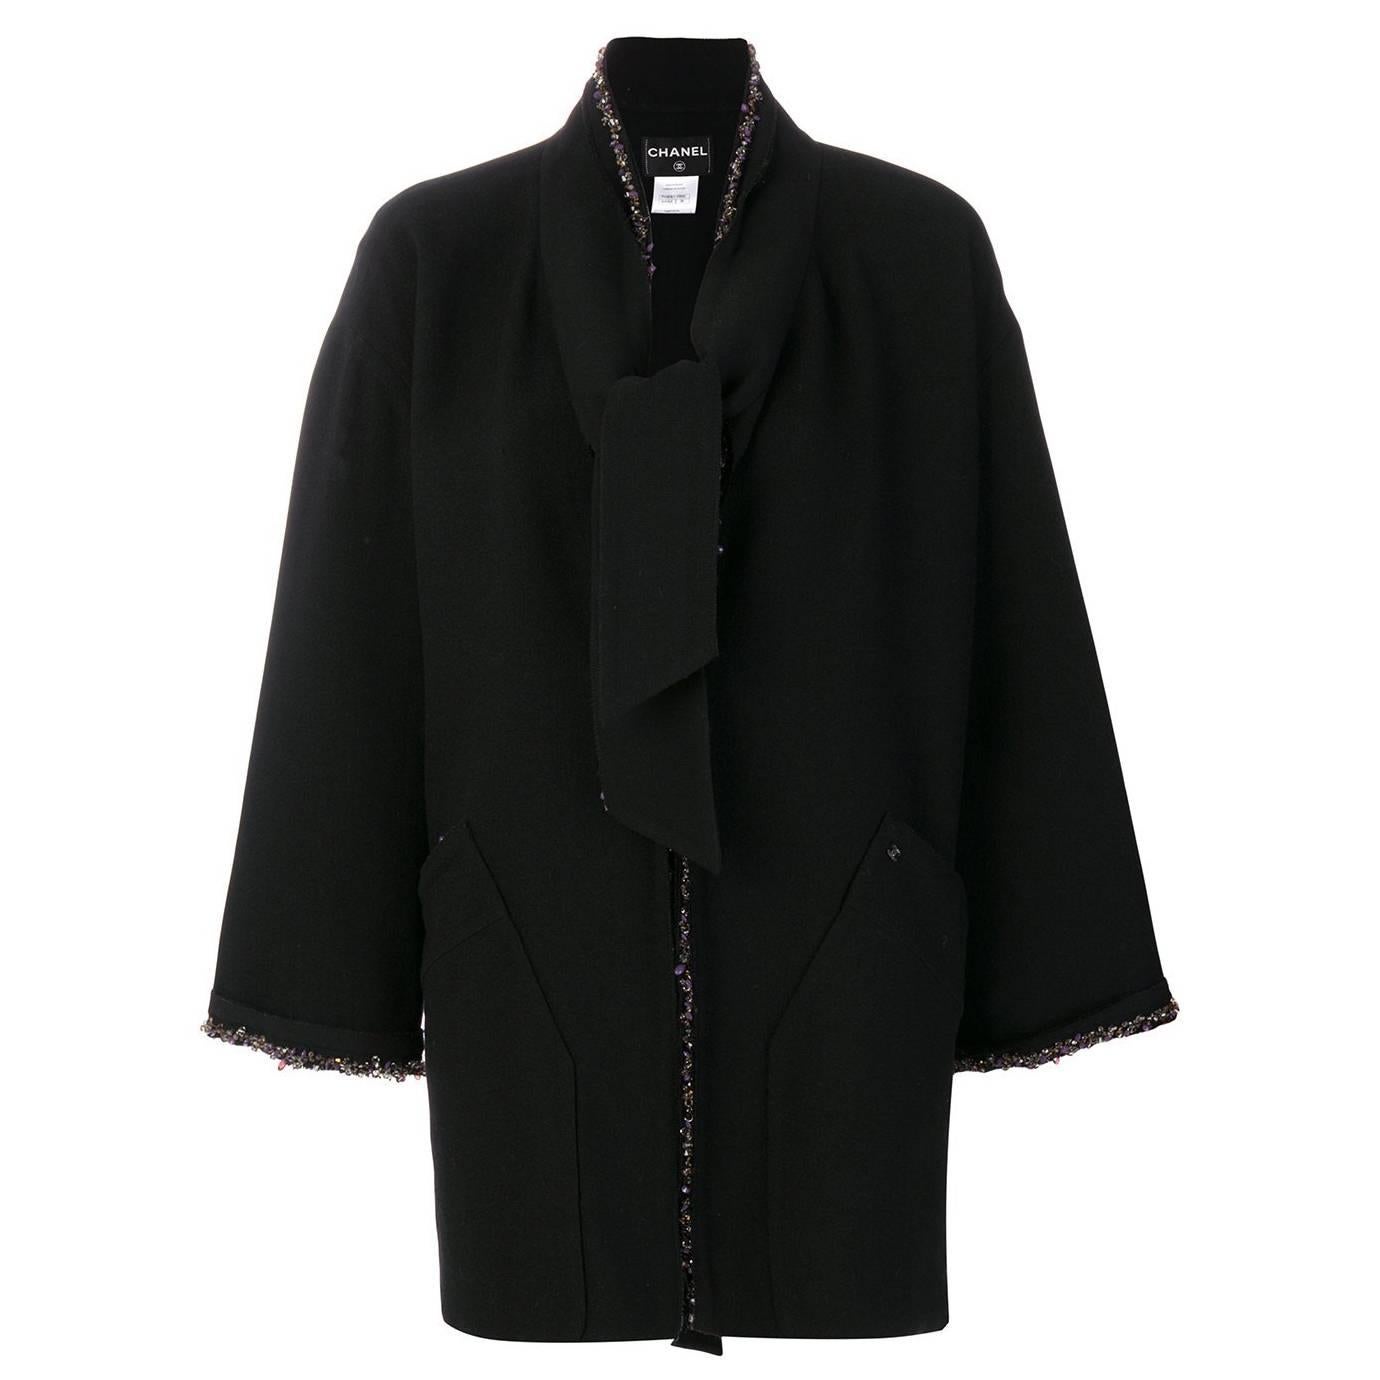 Chanel Beaded Black Coat